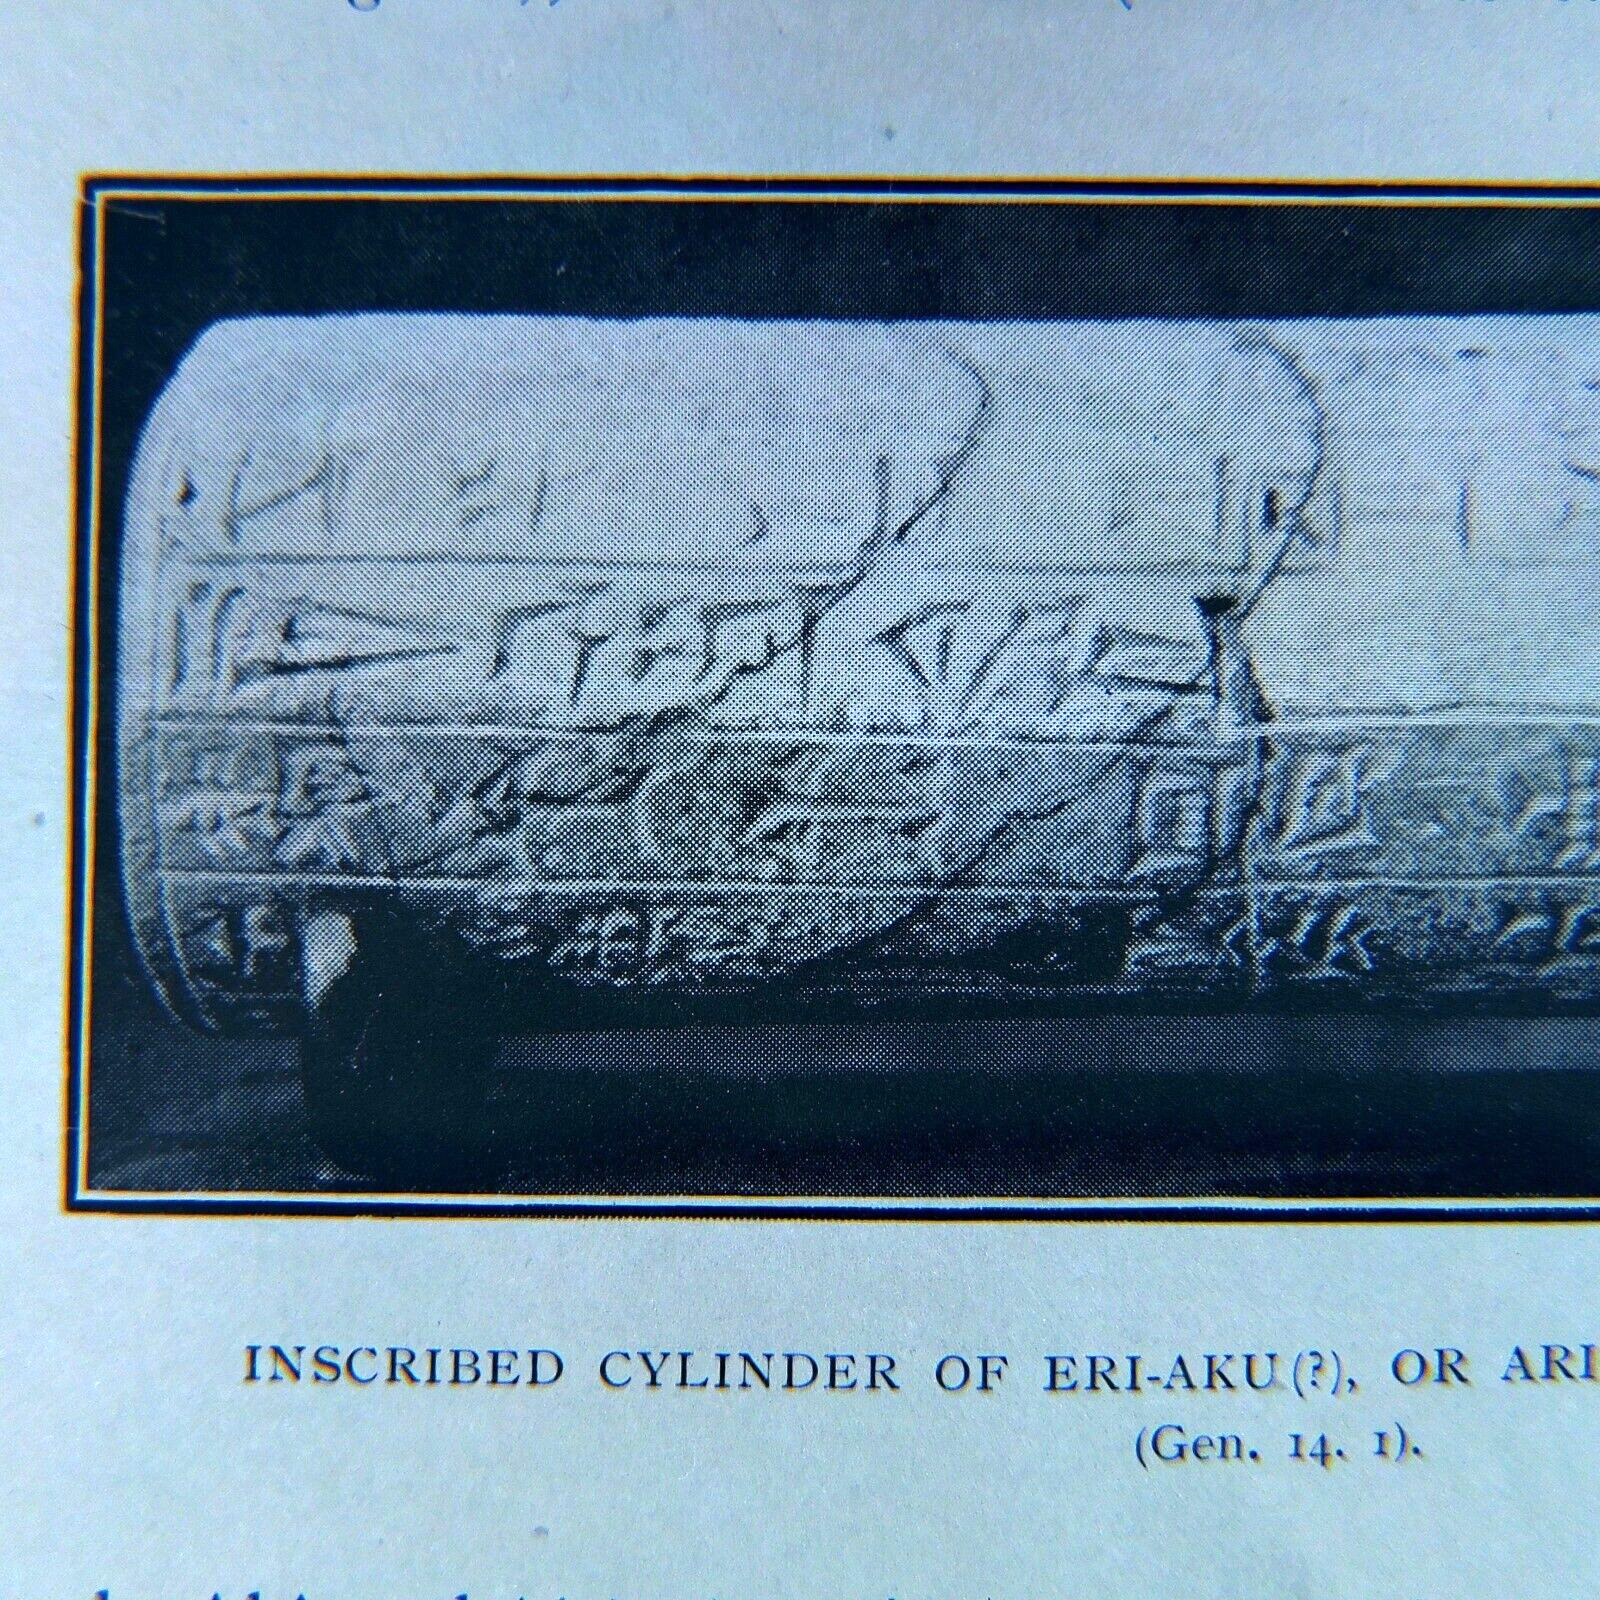 c.1900s Glass Plate Negative inscribed cylinder of Eri-Aku  4x5 